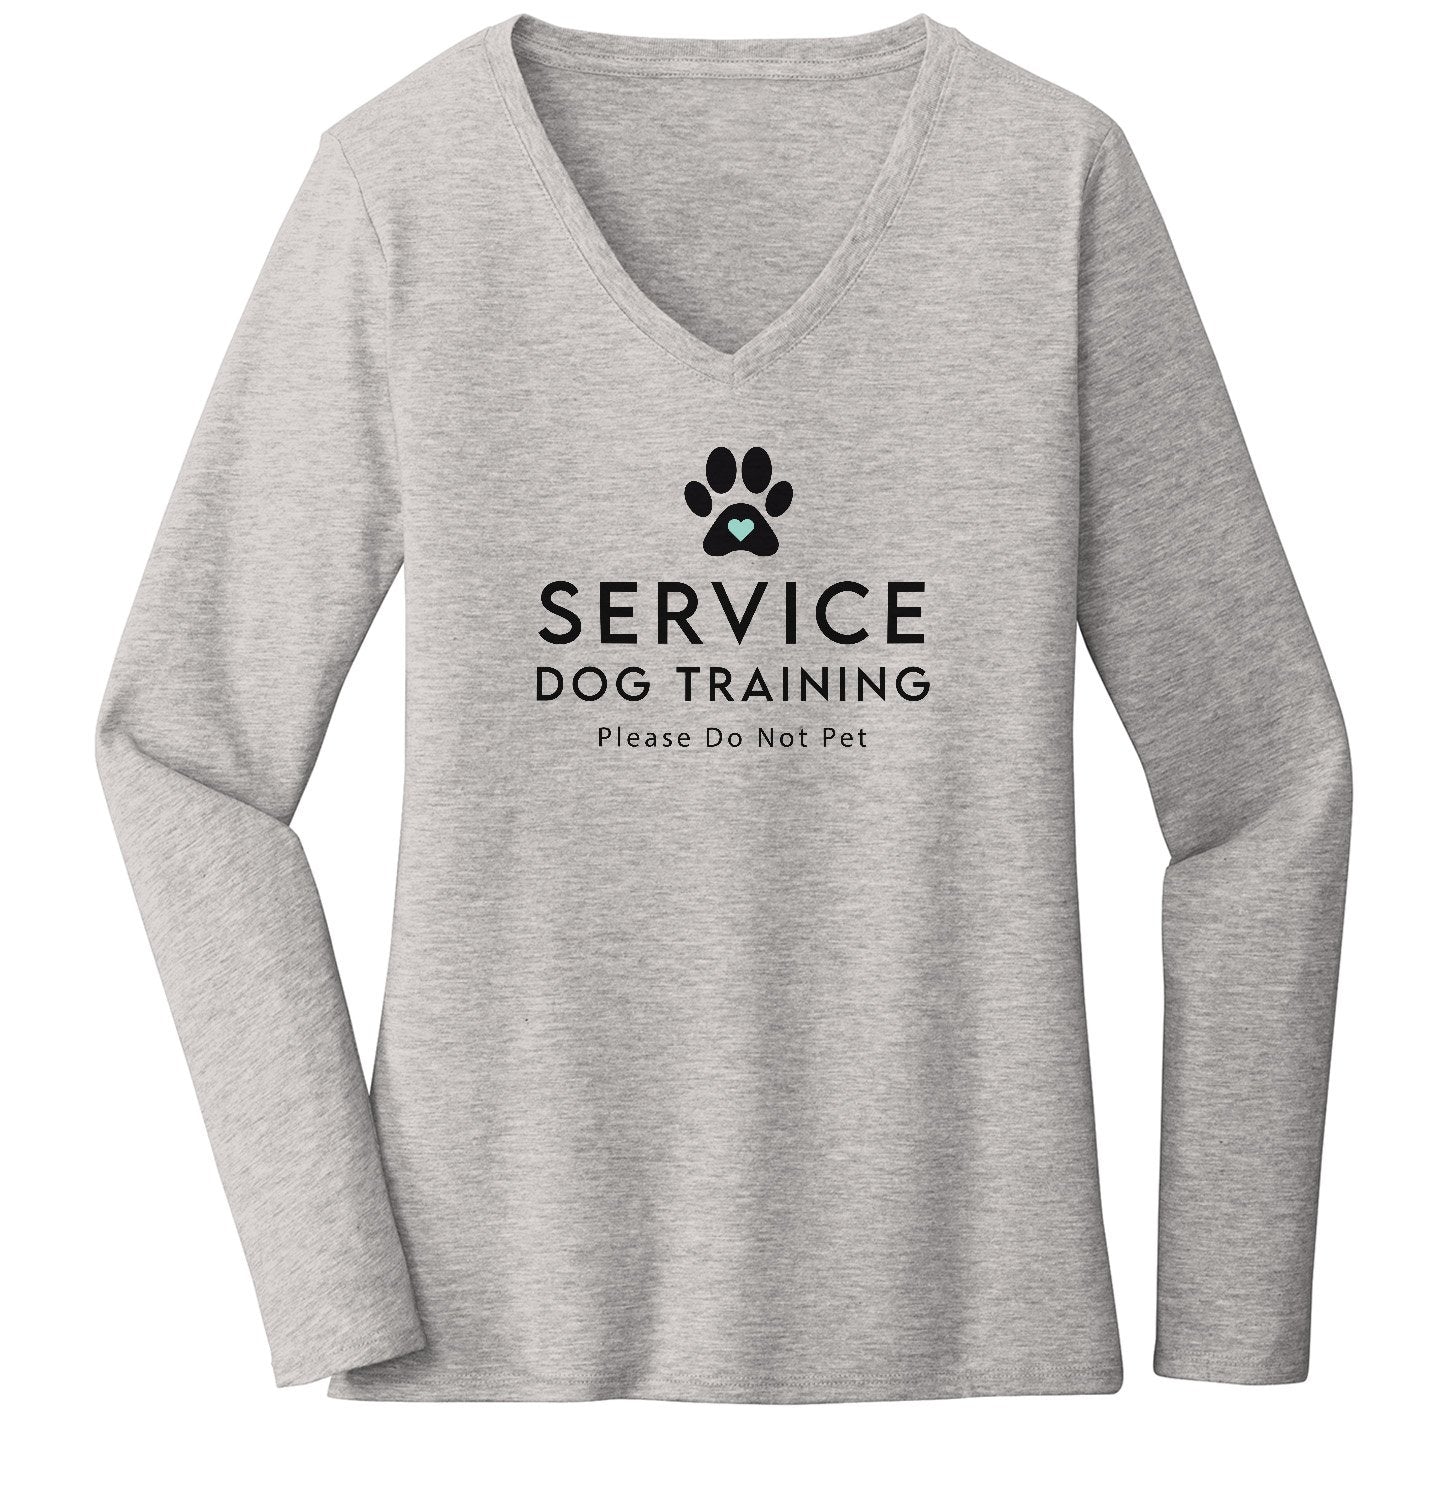 Service Dog Training - Women's V-Neck Long Sleeve T-Shirt